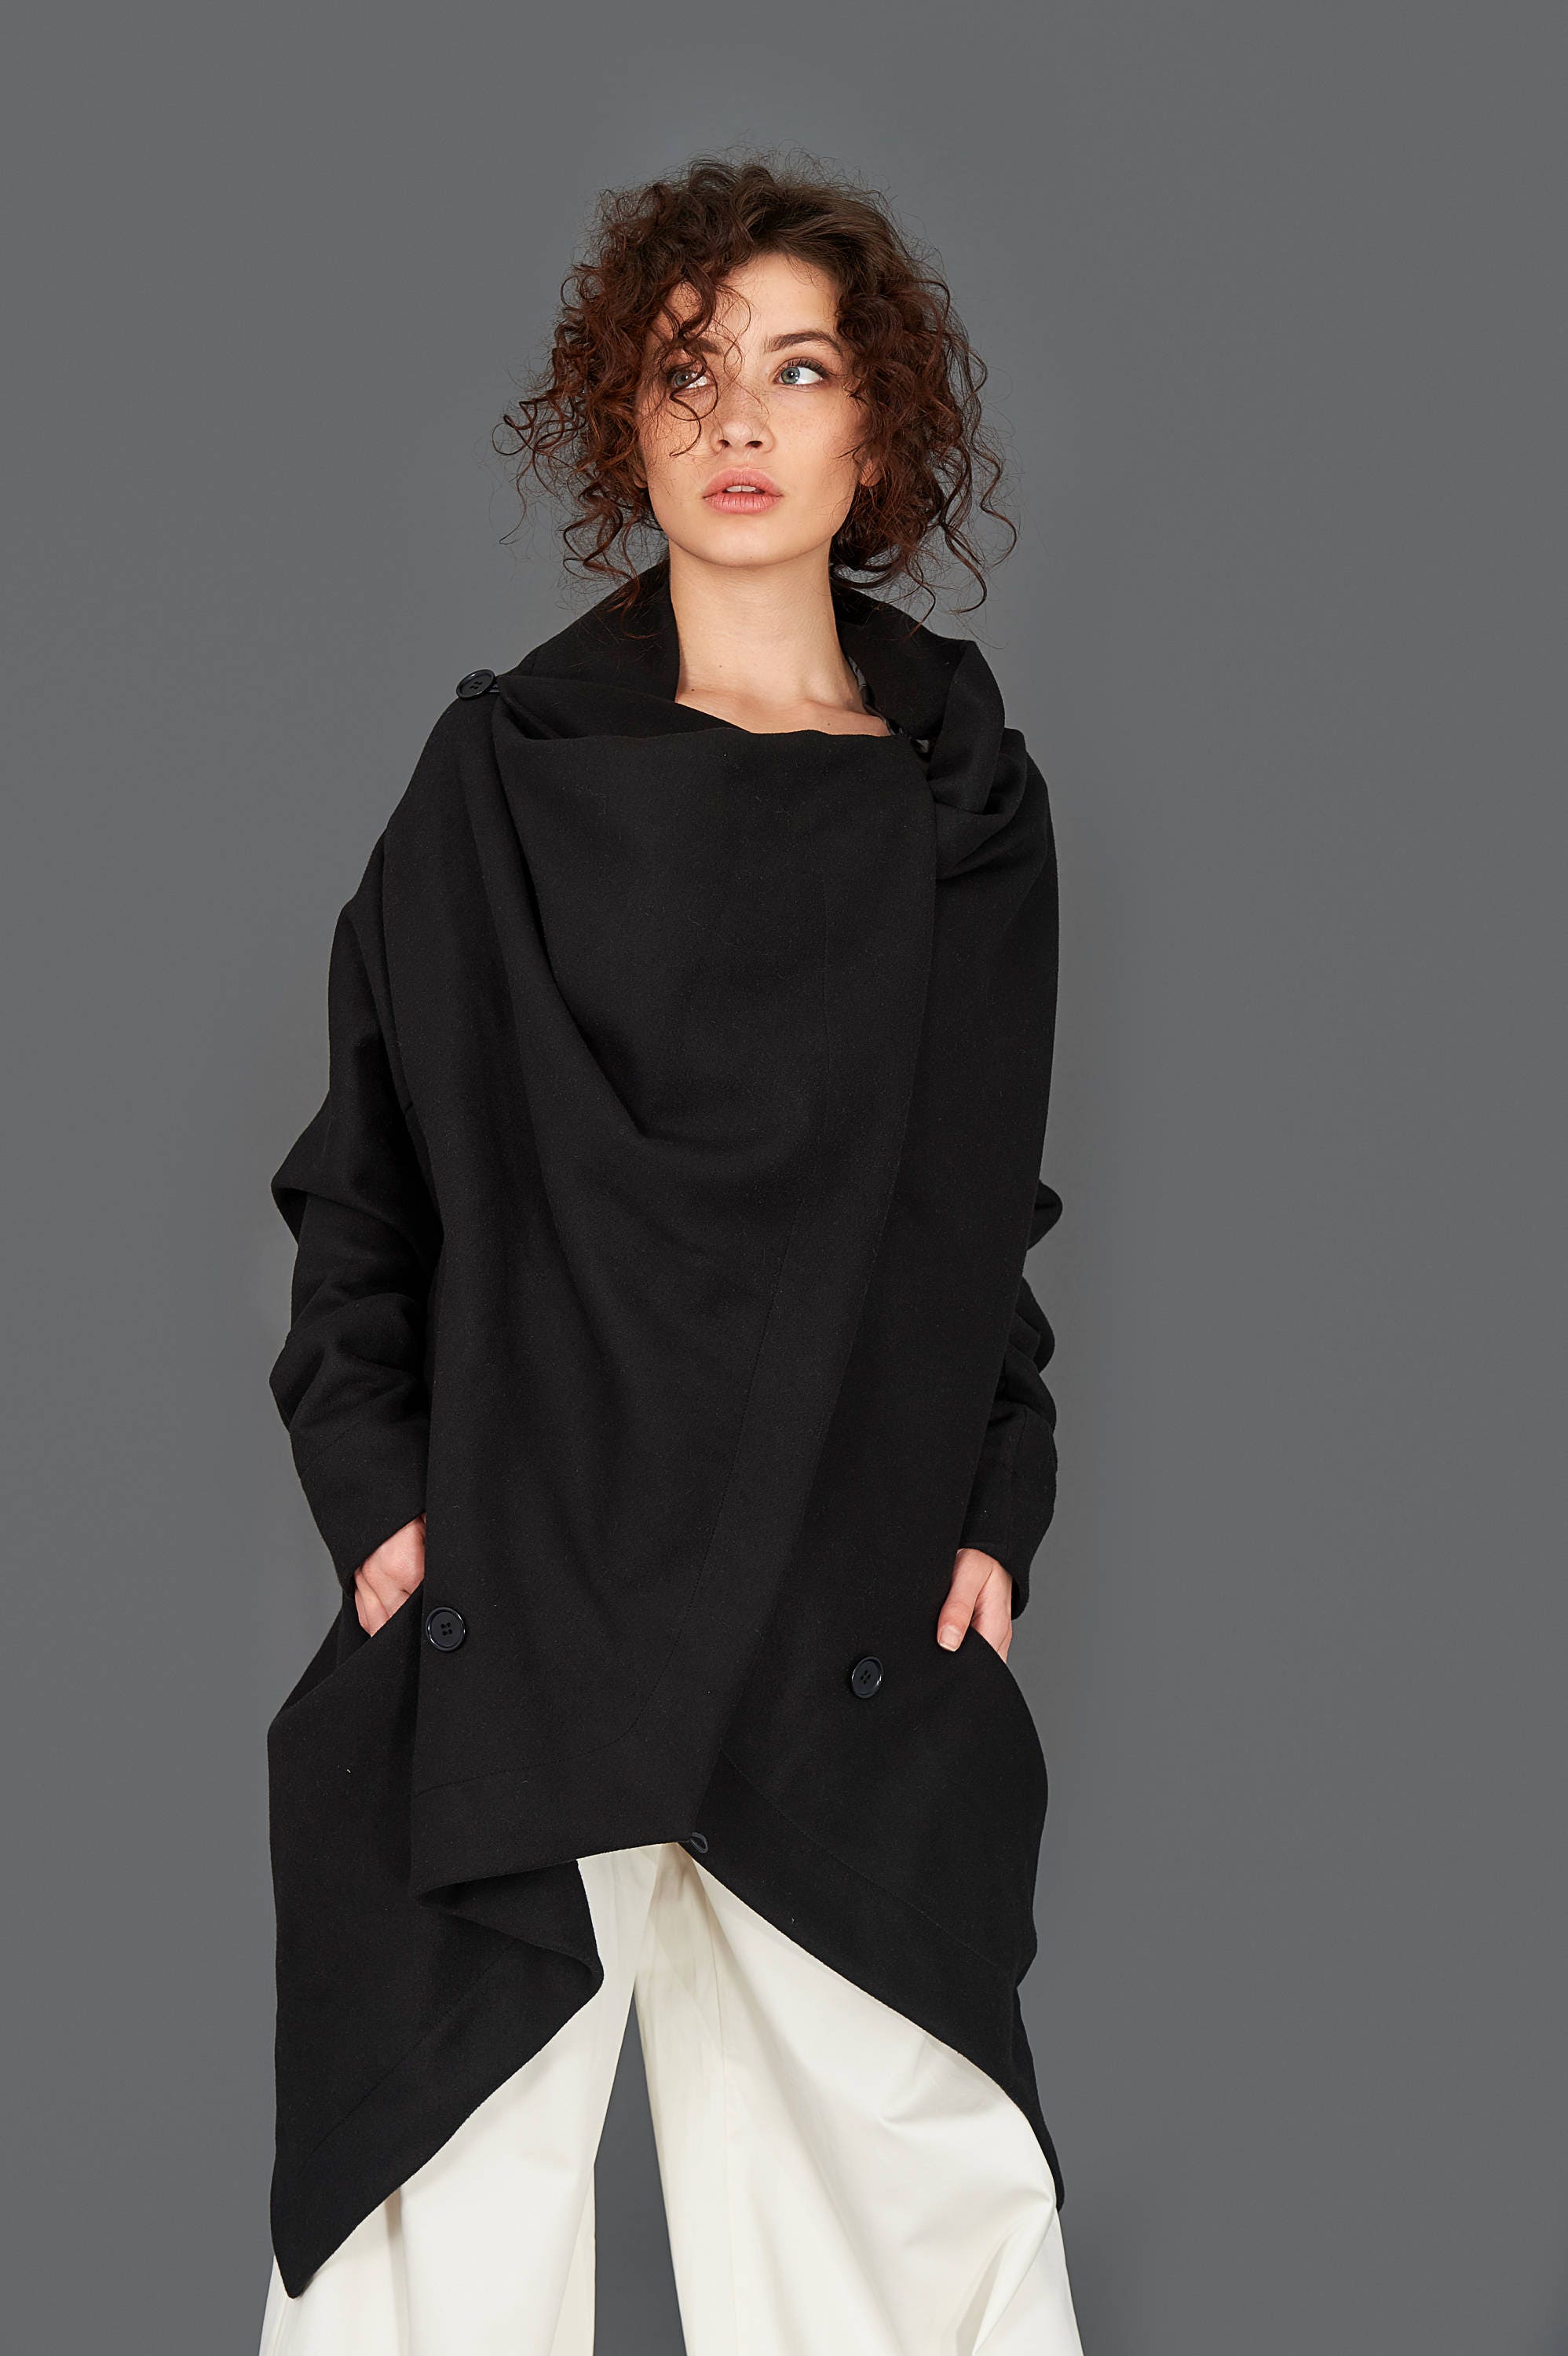 Gothic Clothing Cape Asymmetric Black Coat Plus Size Coats